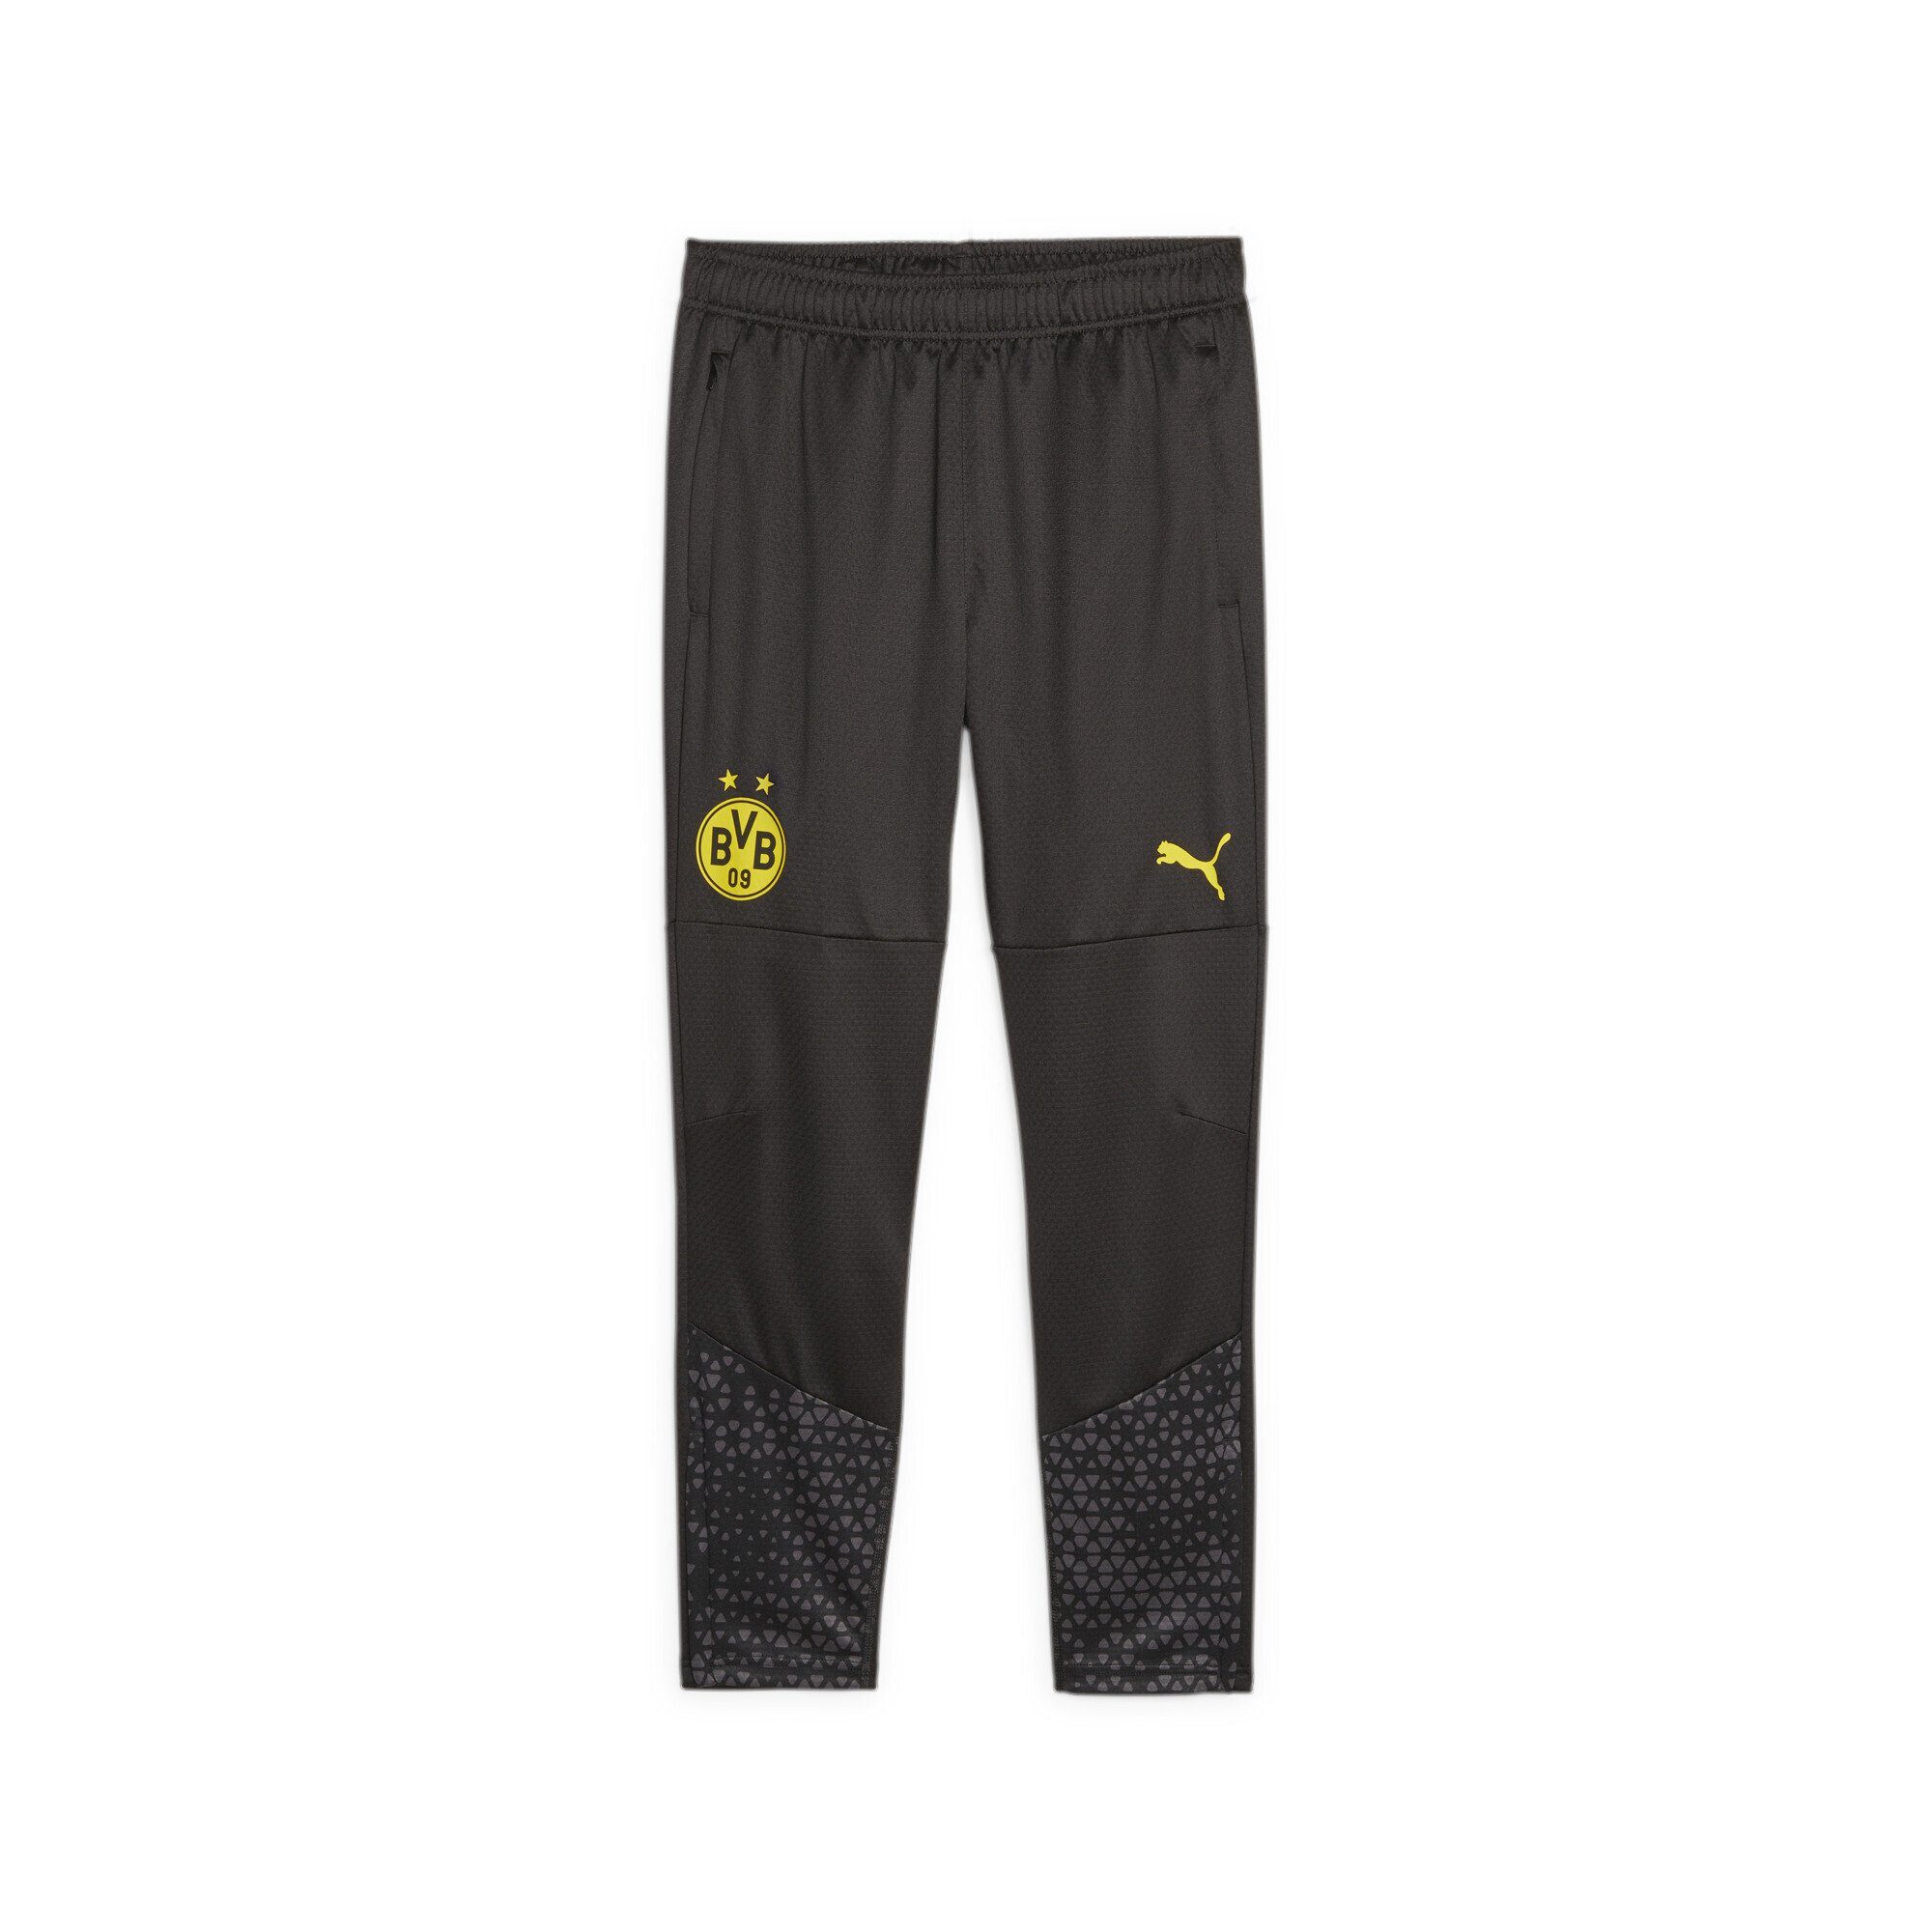 PUMA Sporthose Borussia Dortmund Fußball-Trainingshose Herren Black Cyber Yellow | Turnhosen